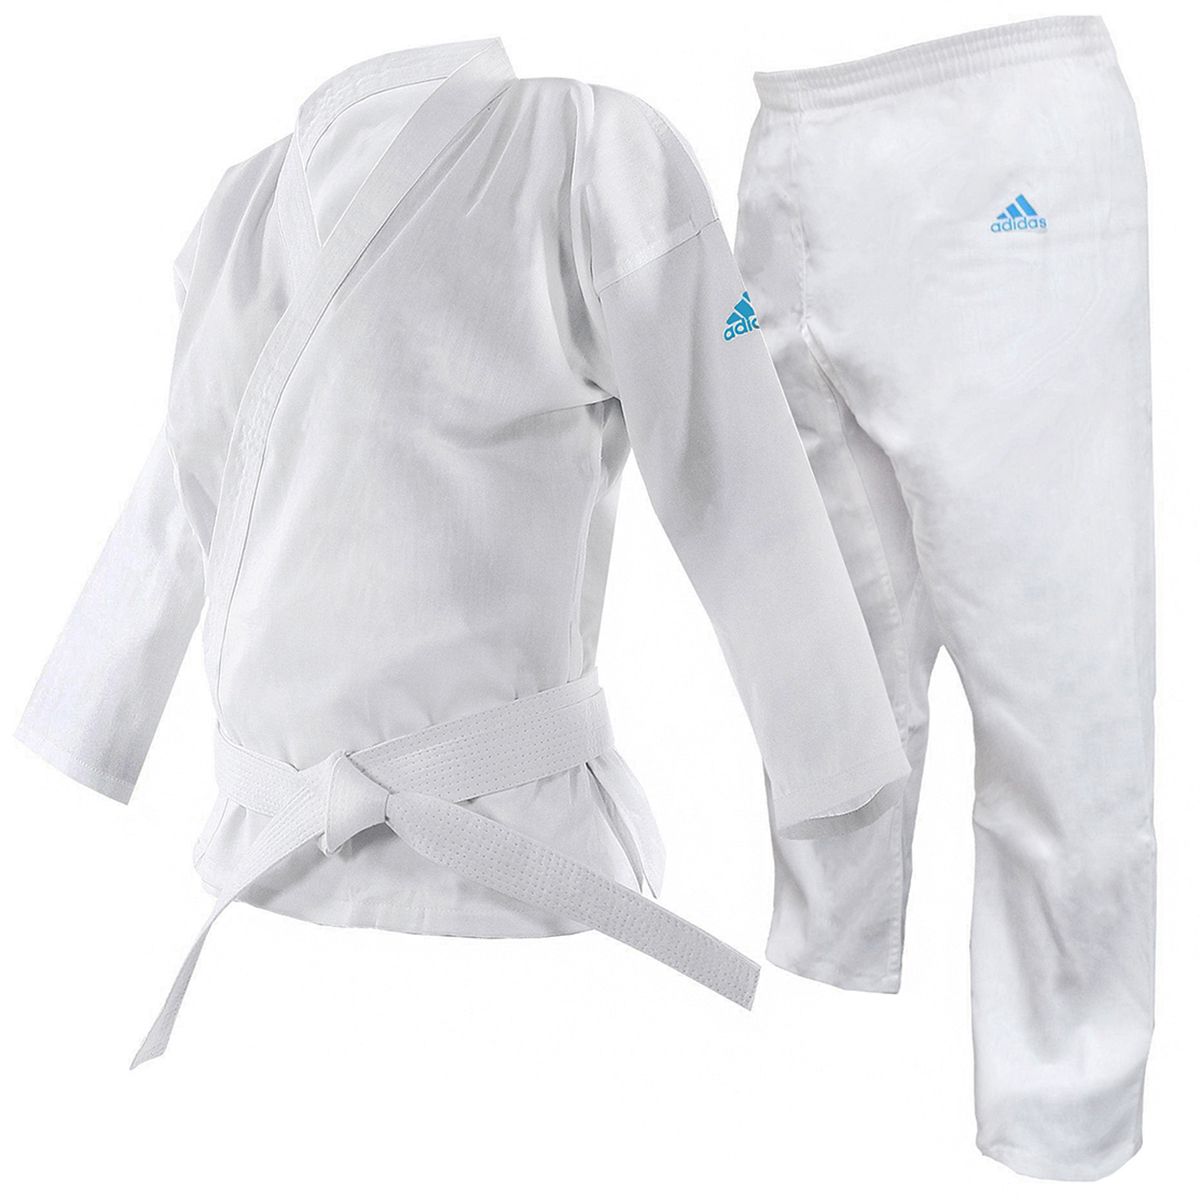 Adidas Adistart Kids Polycotton Karate Uniform 7oz - White - Click Image to Close